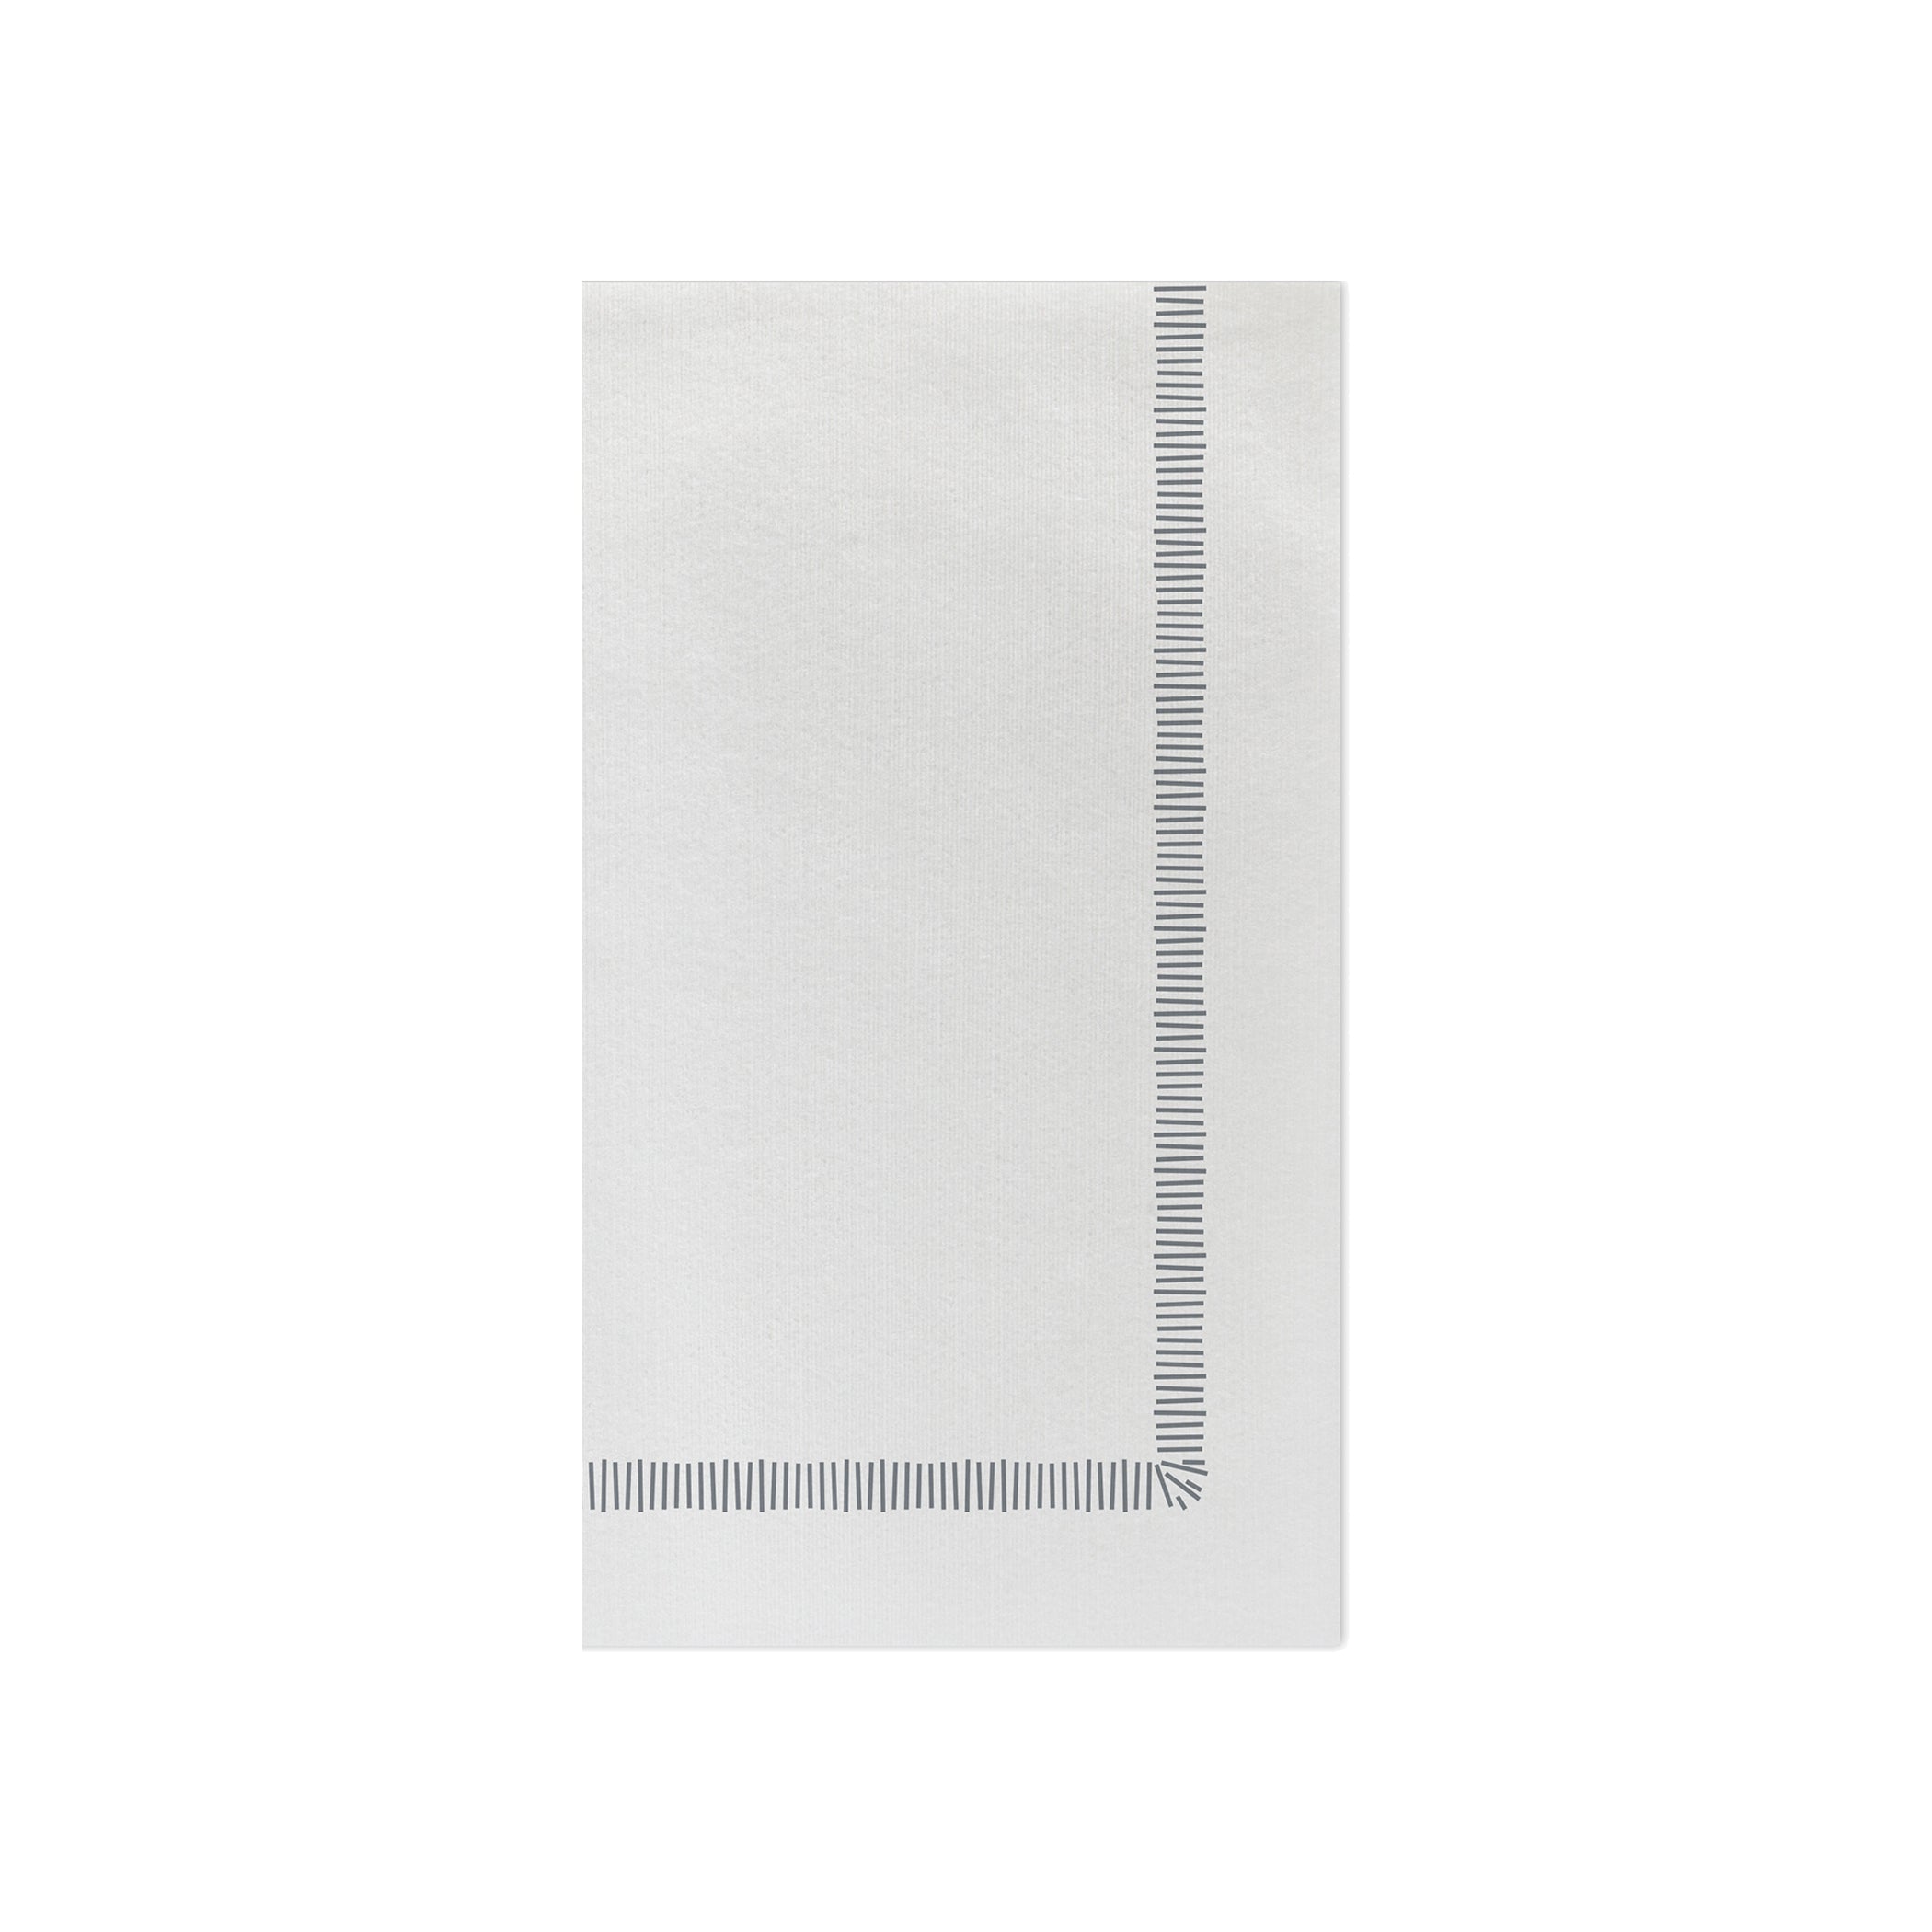 Papersoft Napkins Fringe Grey Guest Towels - Pack of 20